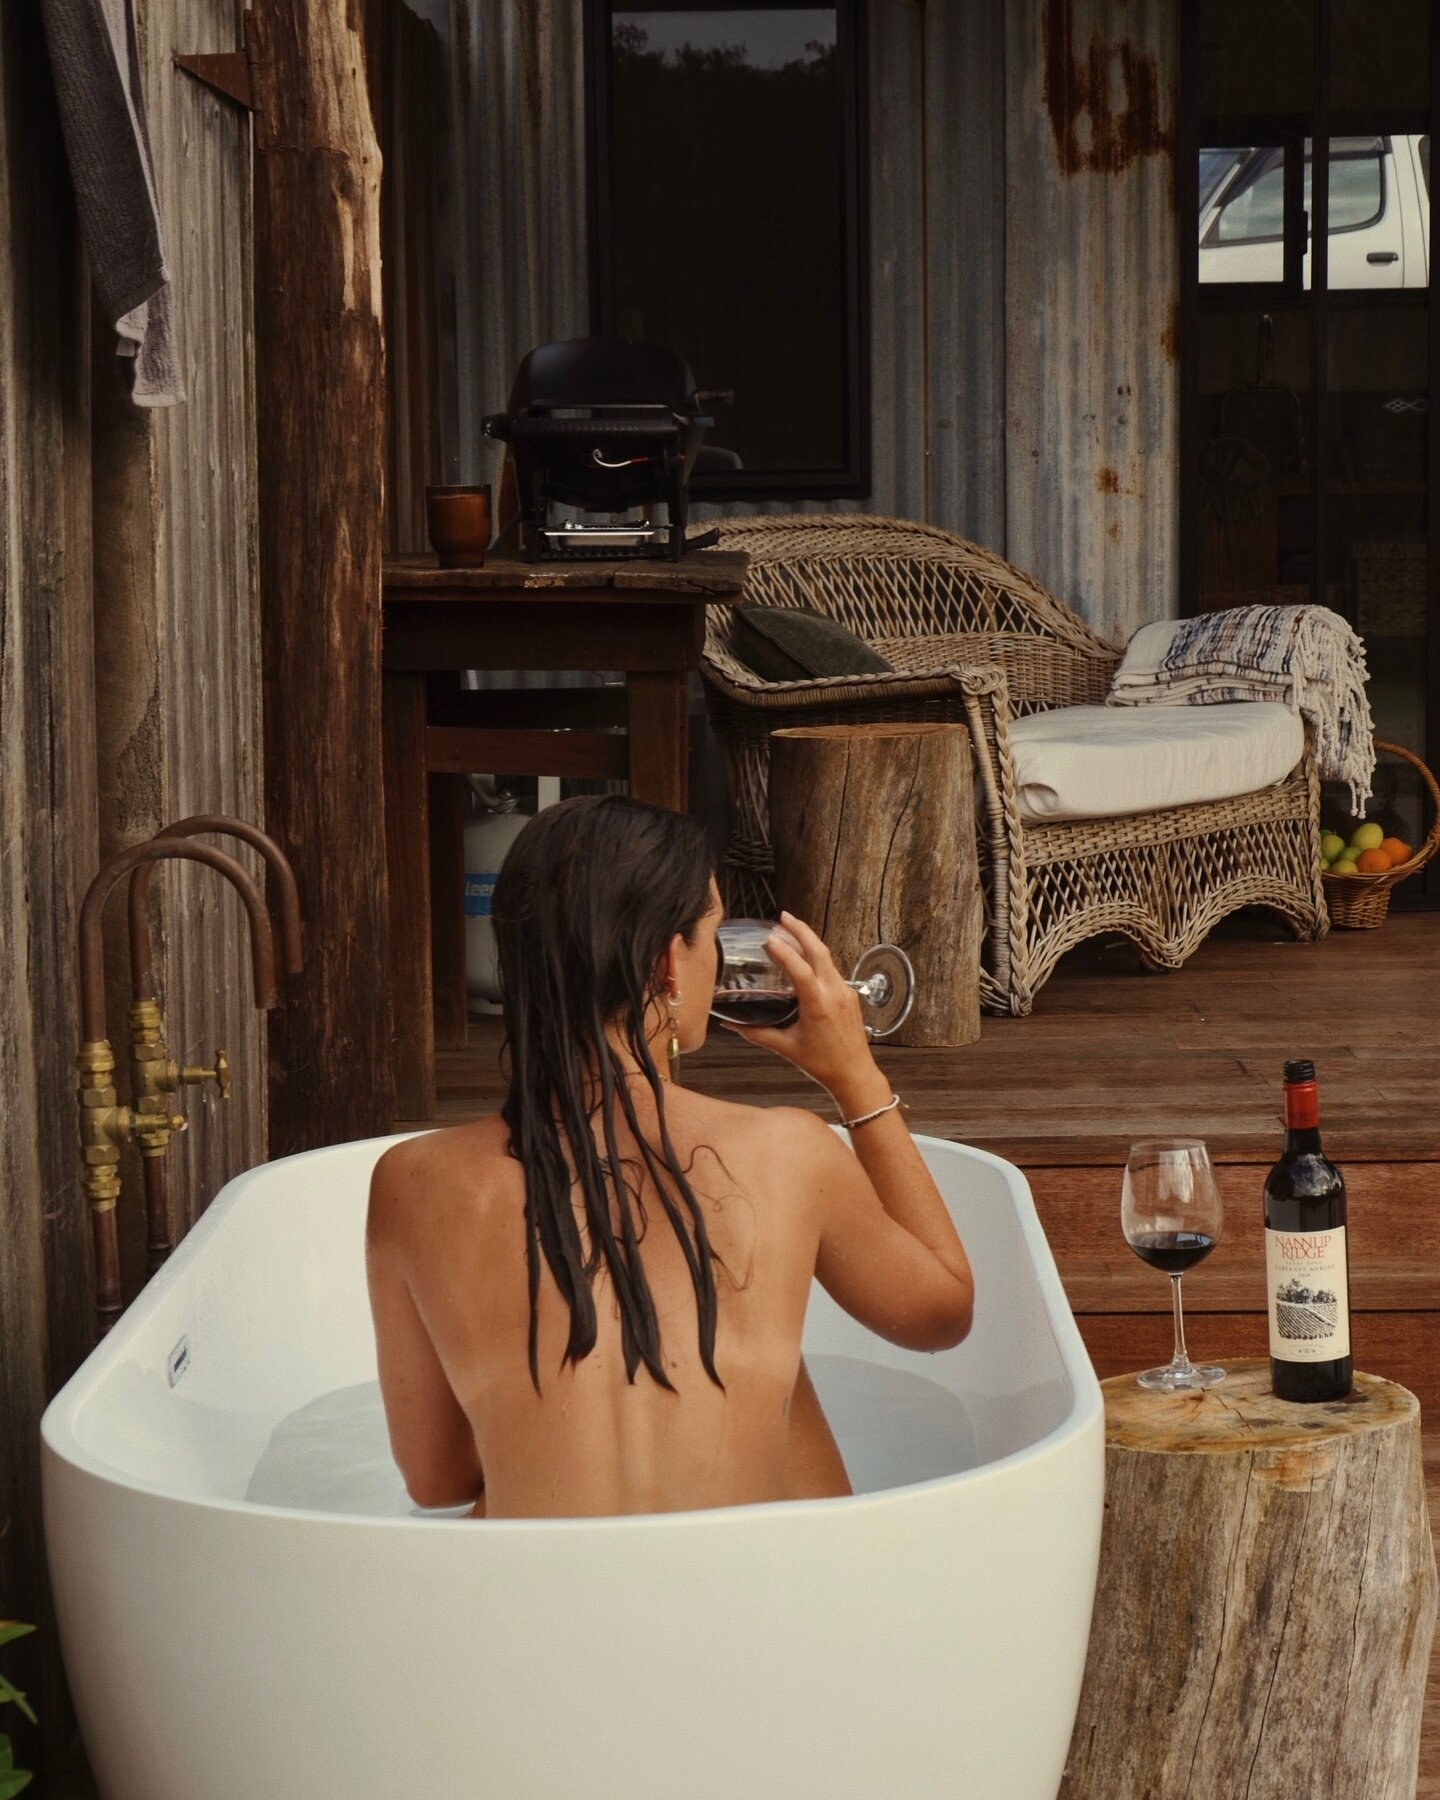 We think @isismoonbollard is thoroughly enjoying herself soaking in the outdoor bathtub 🛁